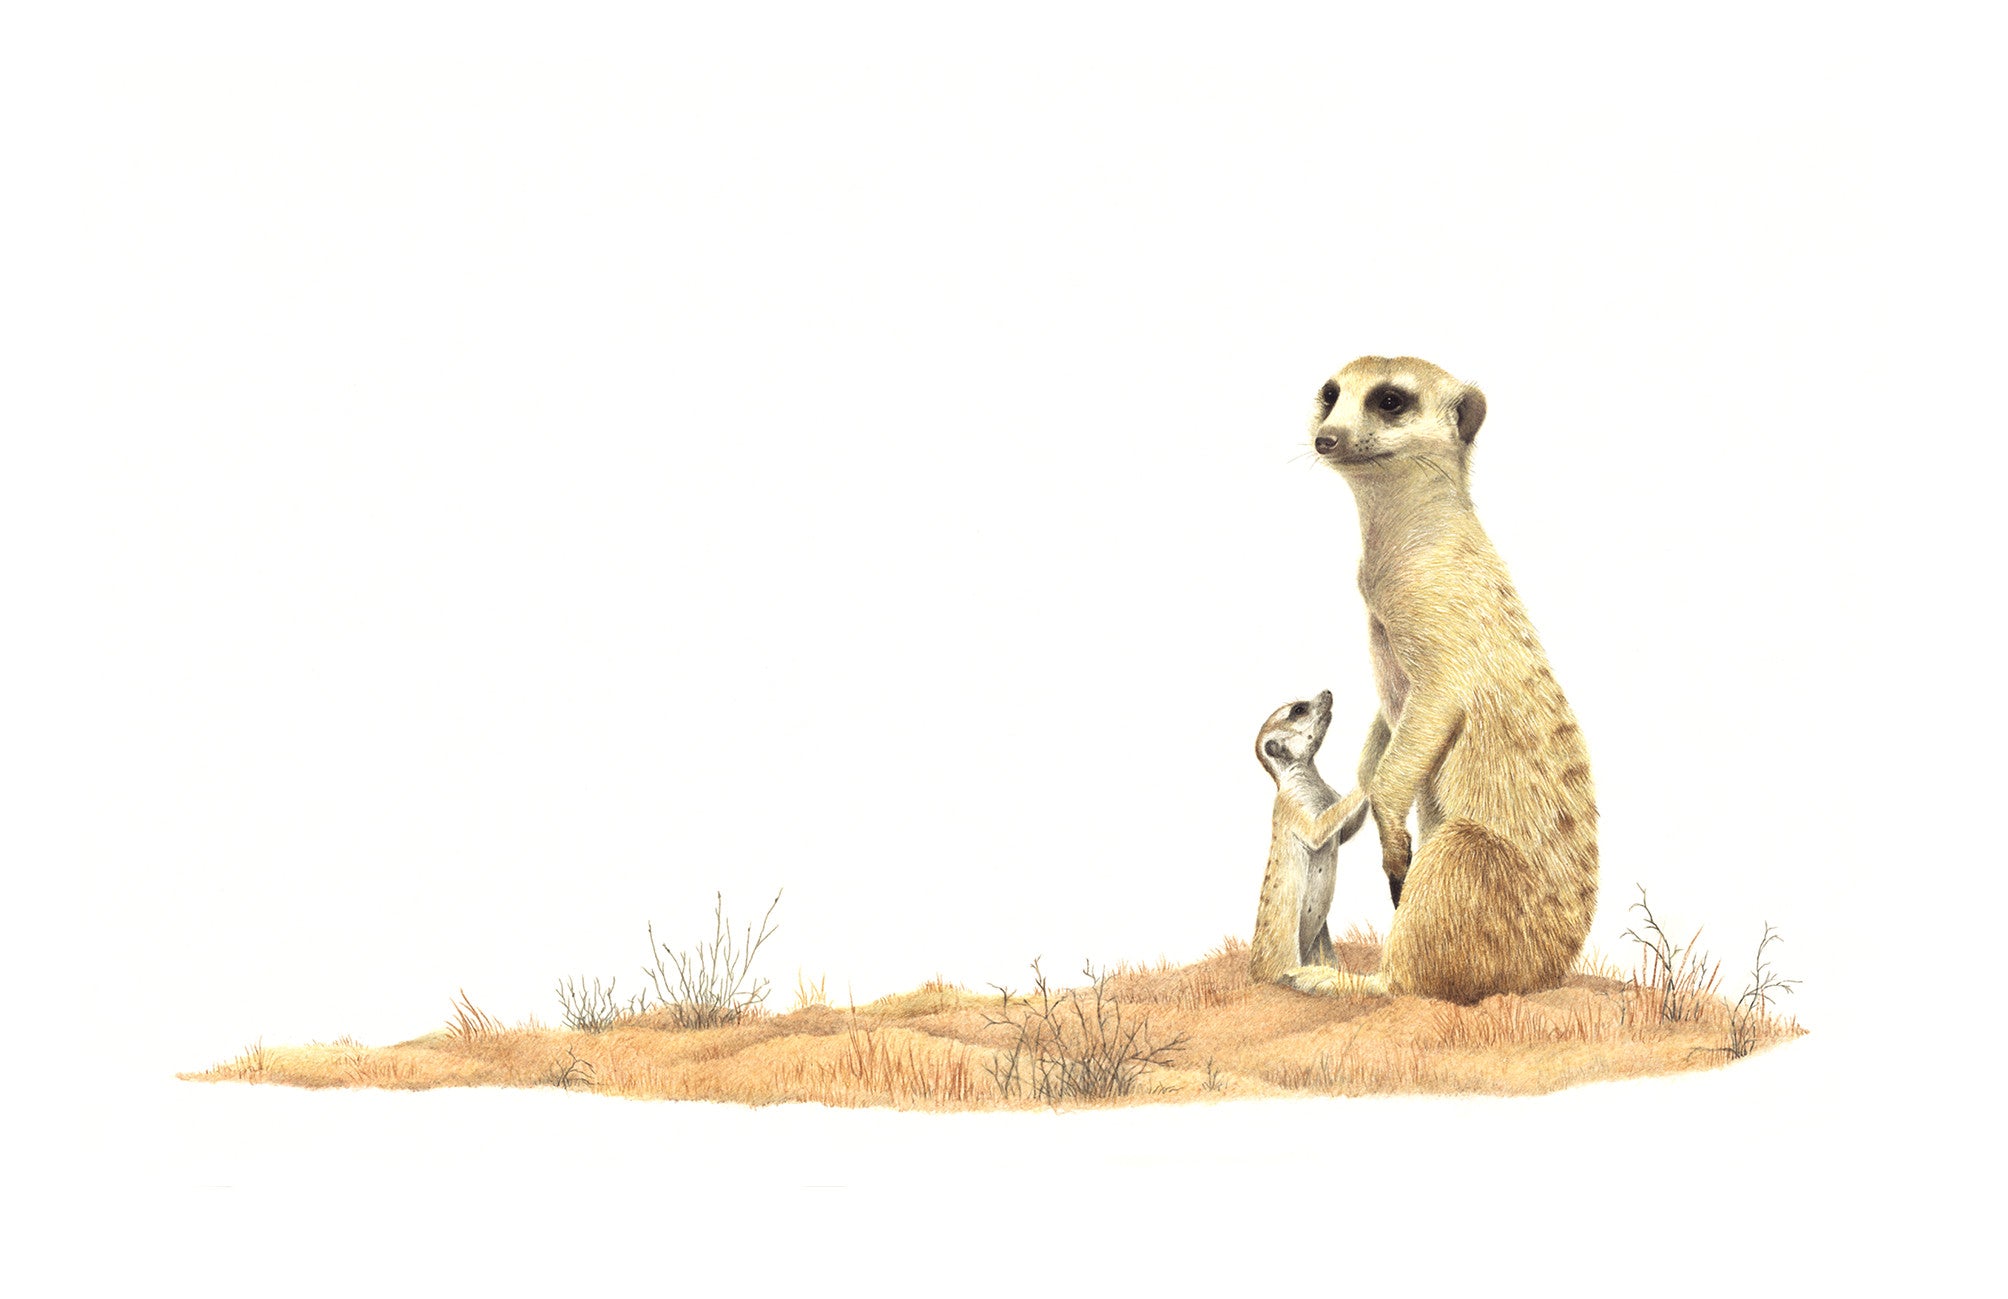 Artork of a mother and baby Meerkat in the Kalahari desert